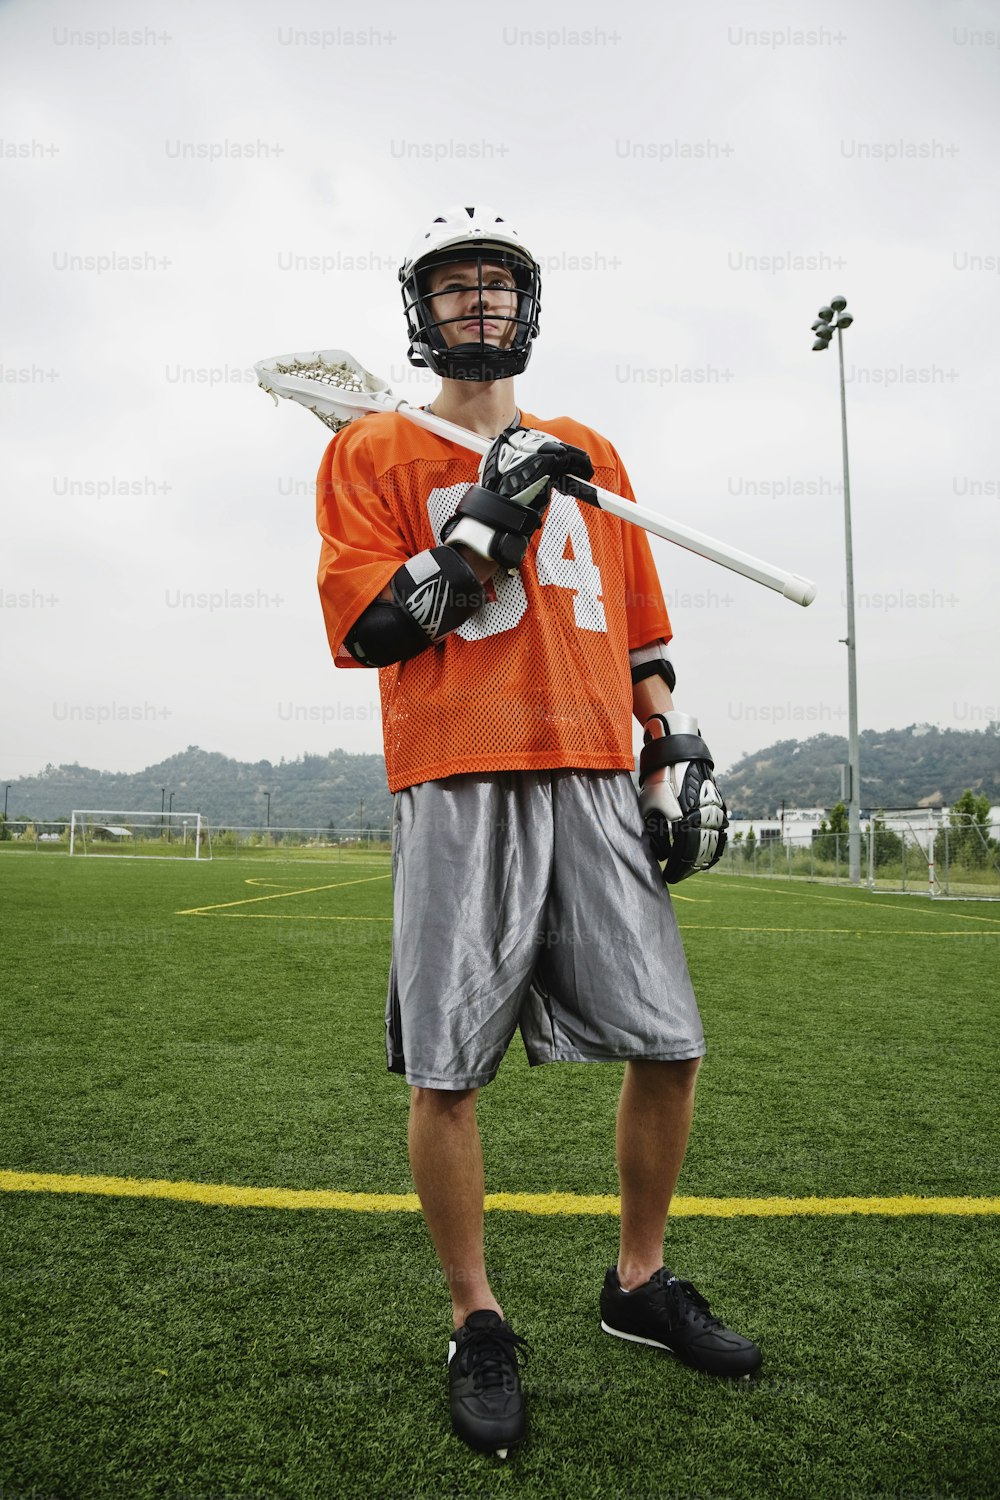 a man in an orange jersey holding a lacrosse stick